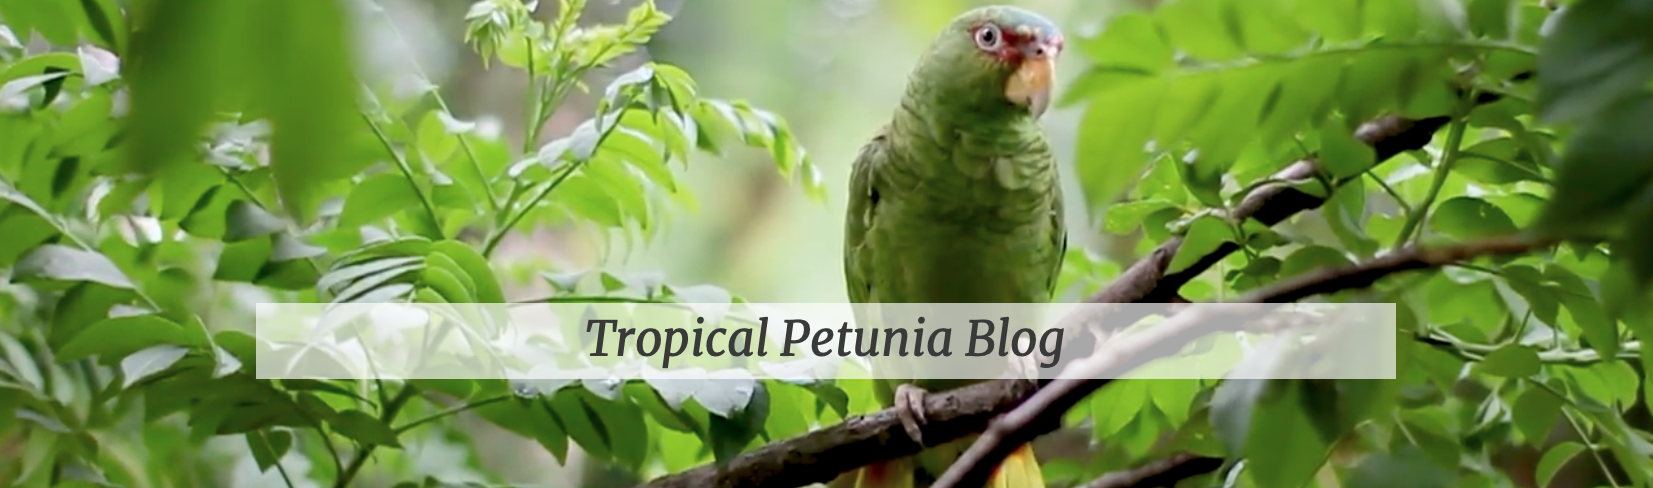 Tropical Petunia Blog